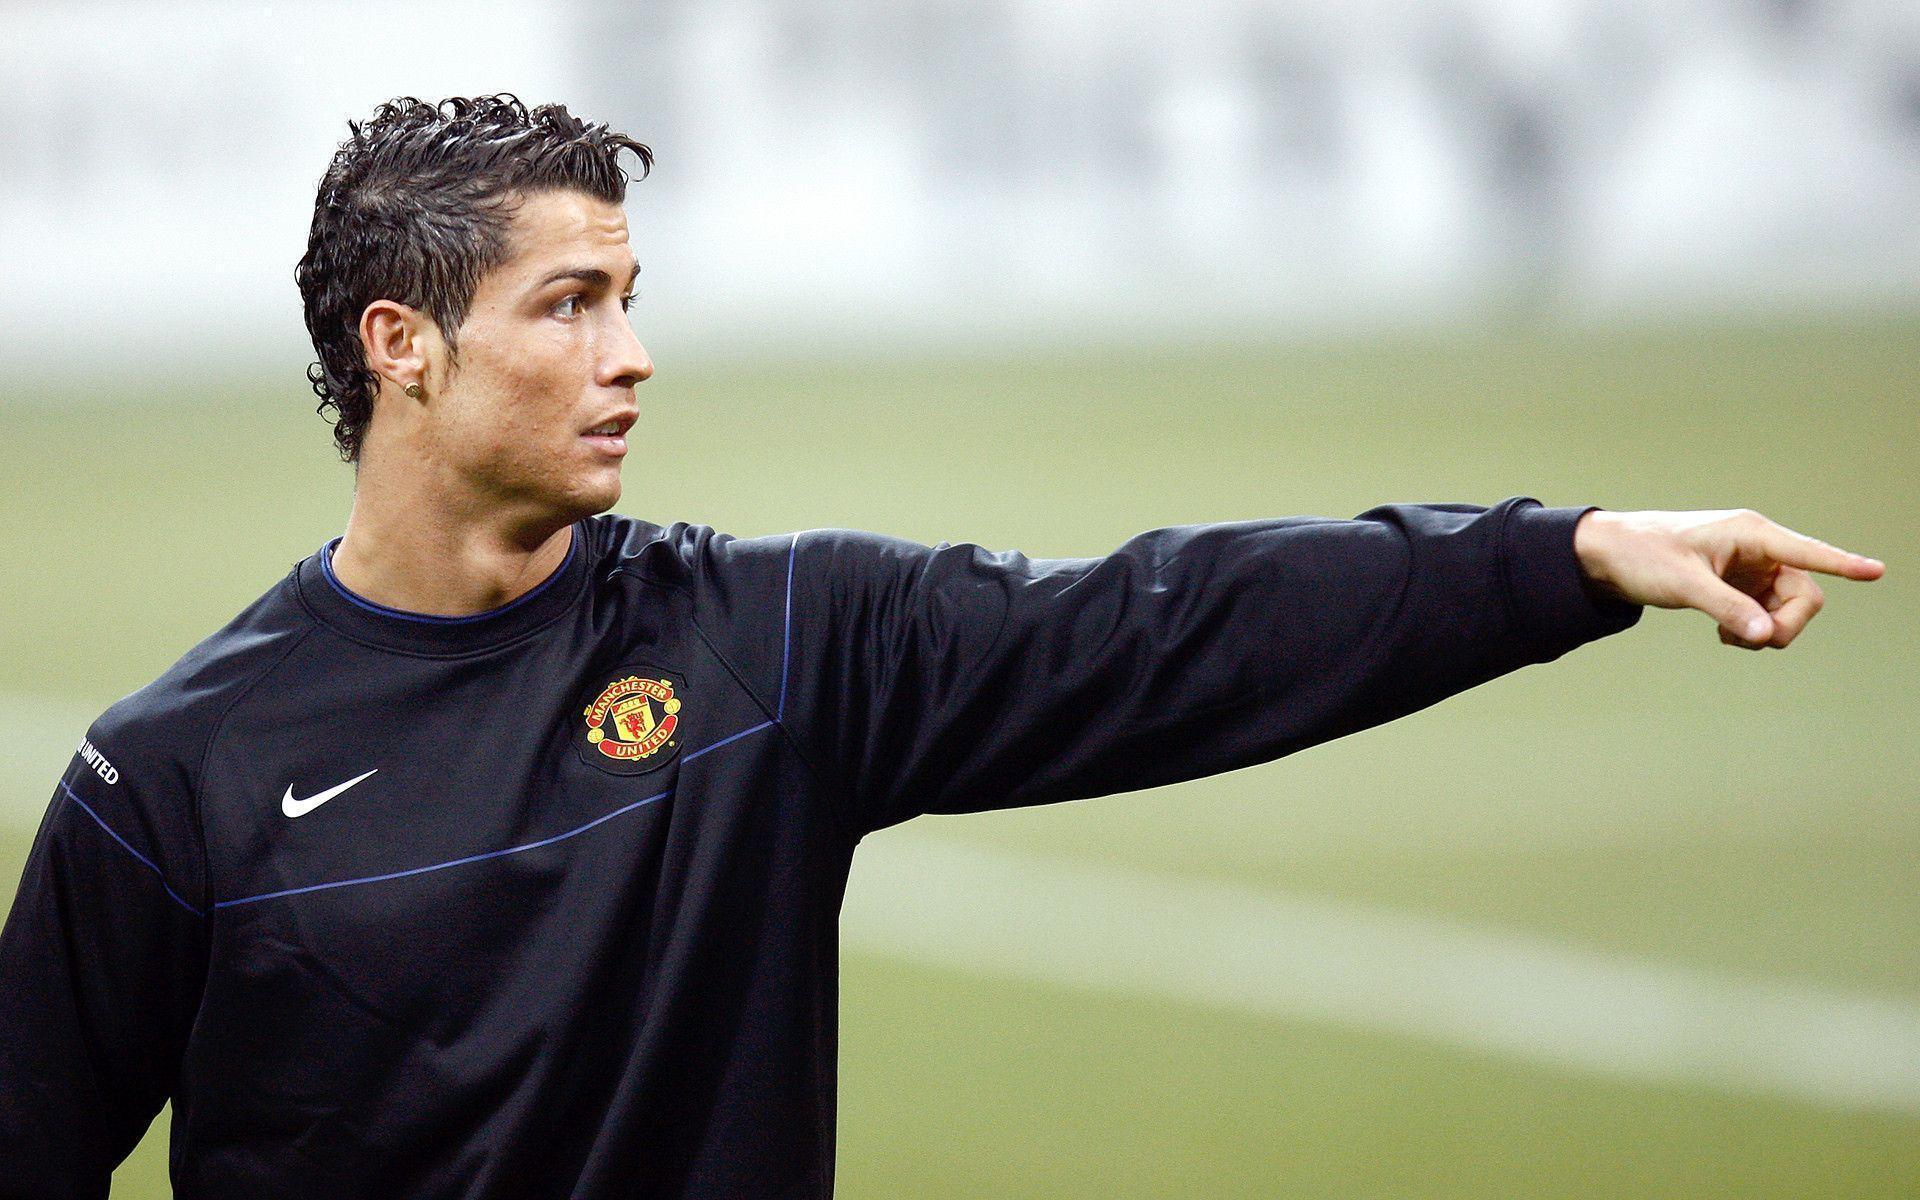 Download Cristiano Ronaldo Hd Free Wallpapers